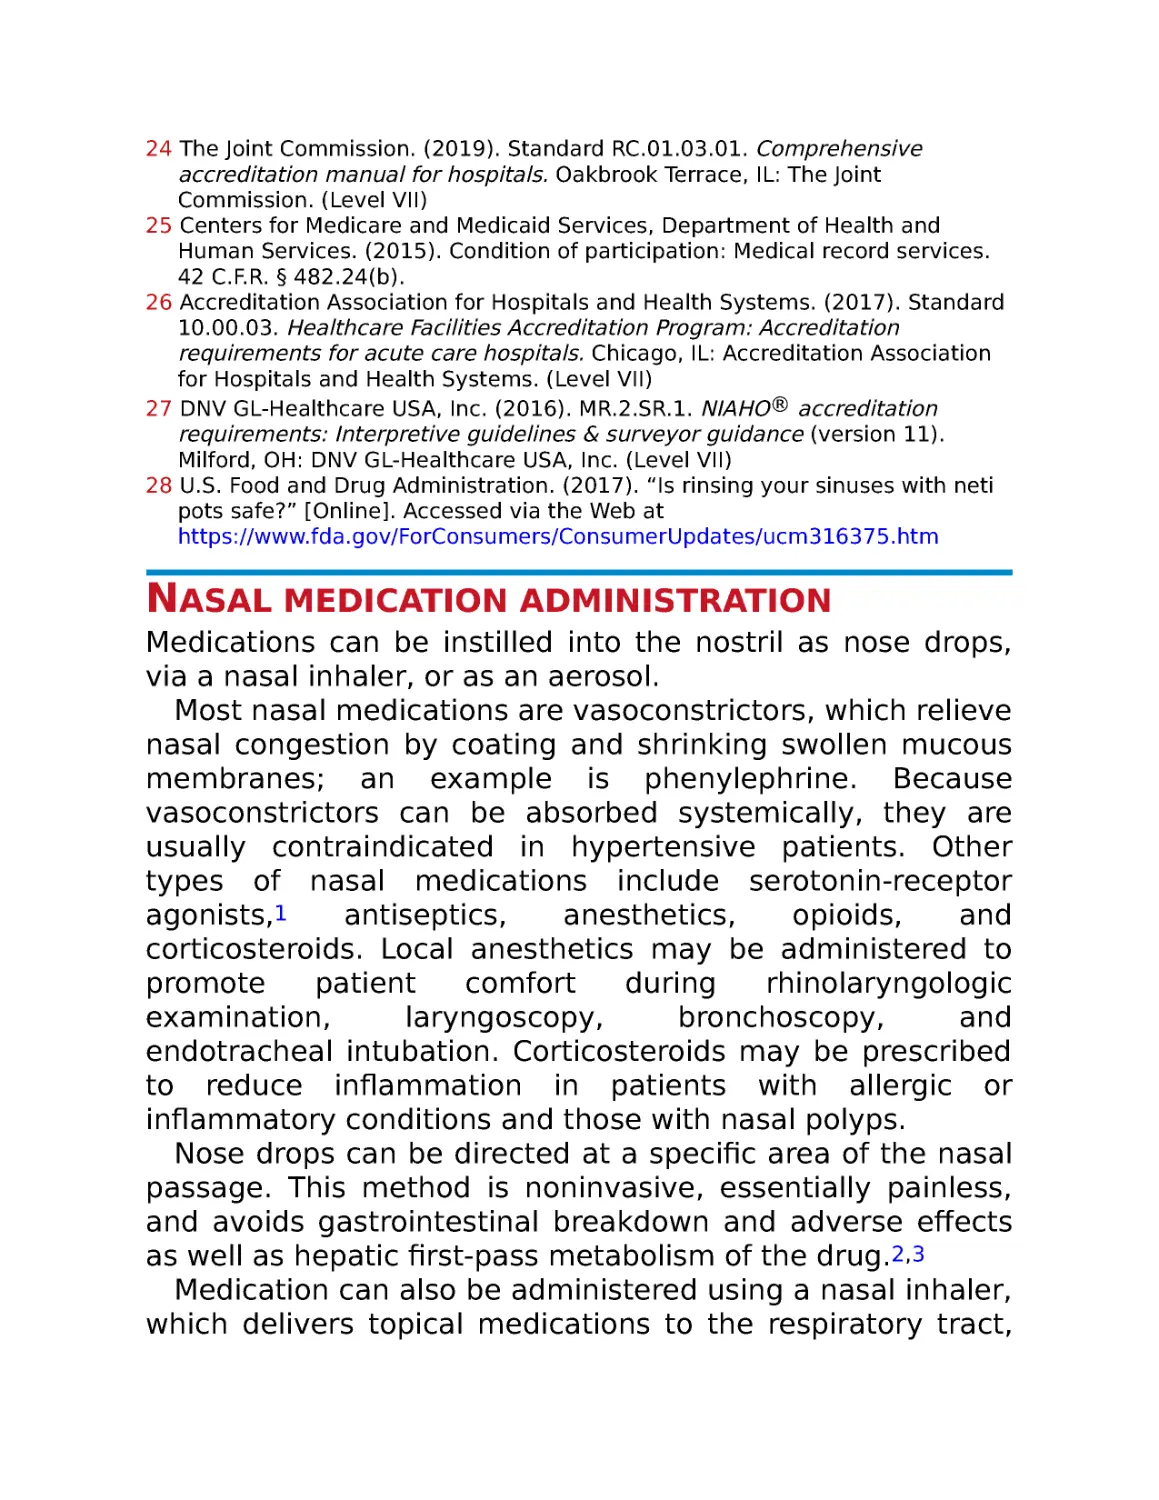 Nasal medication administration